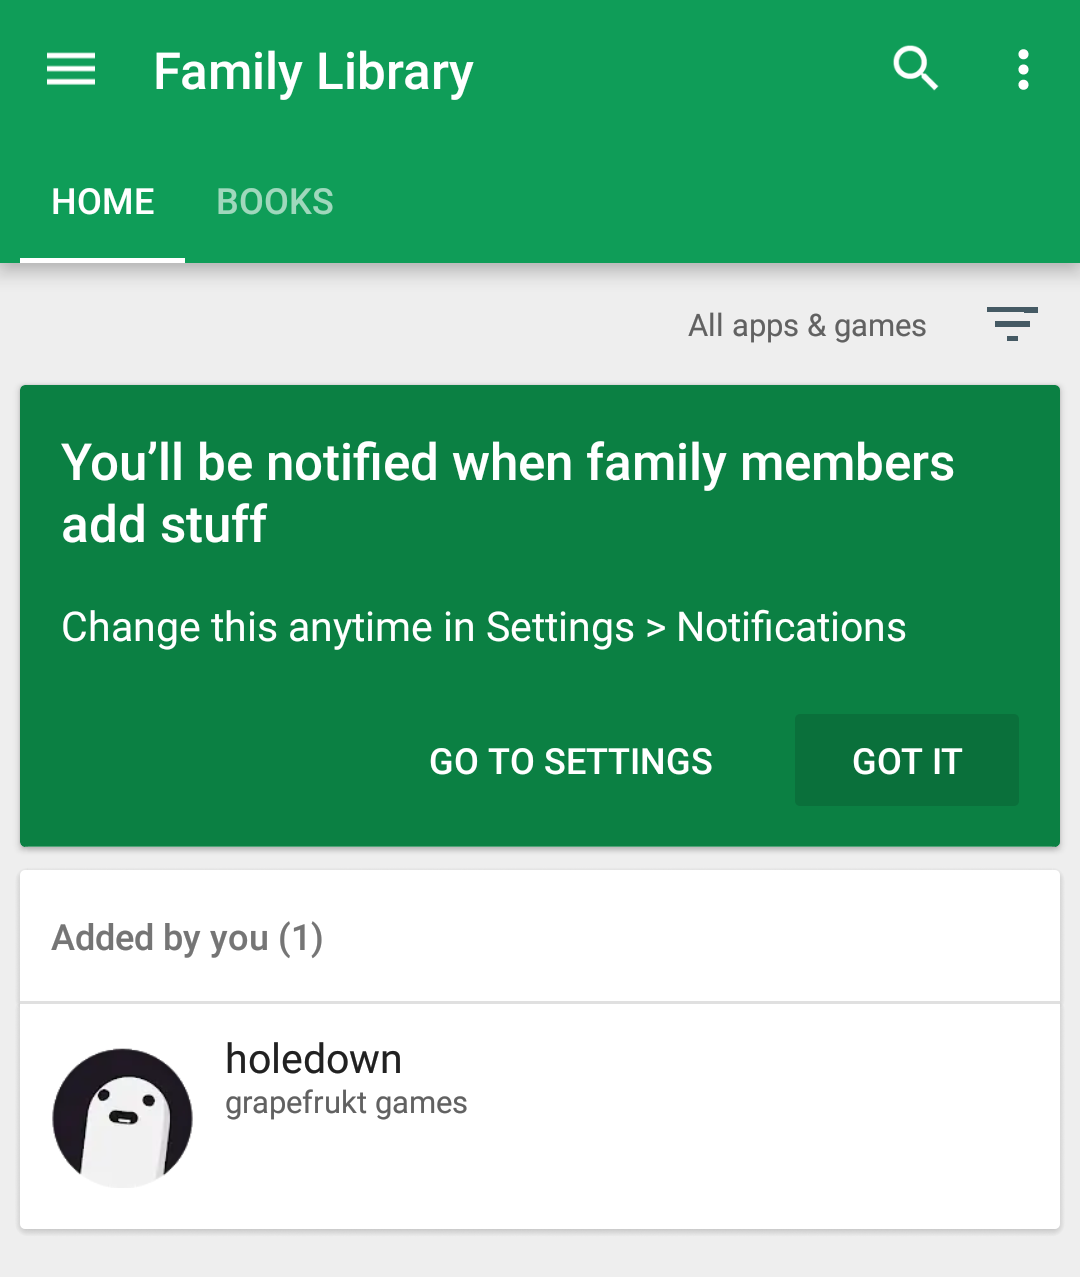 Google Play Family Library